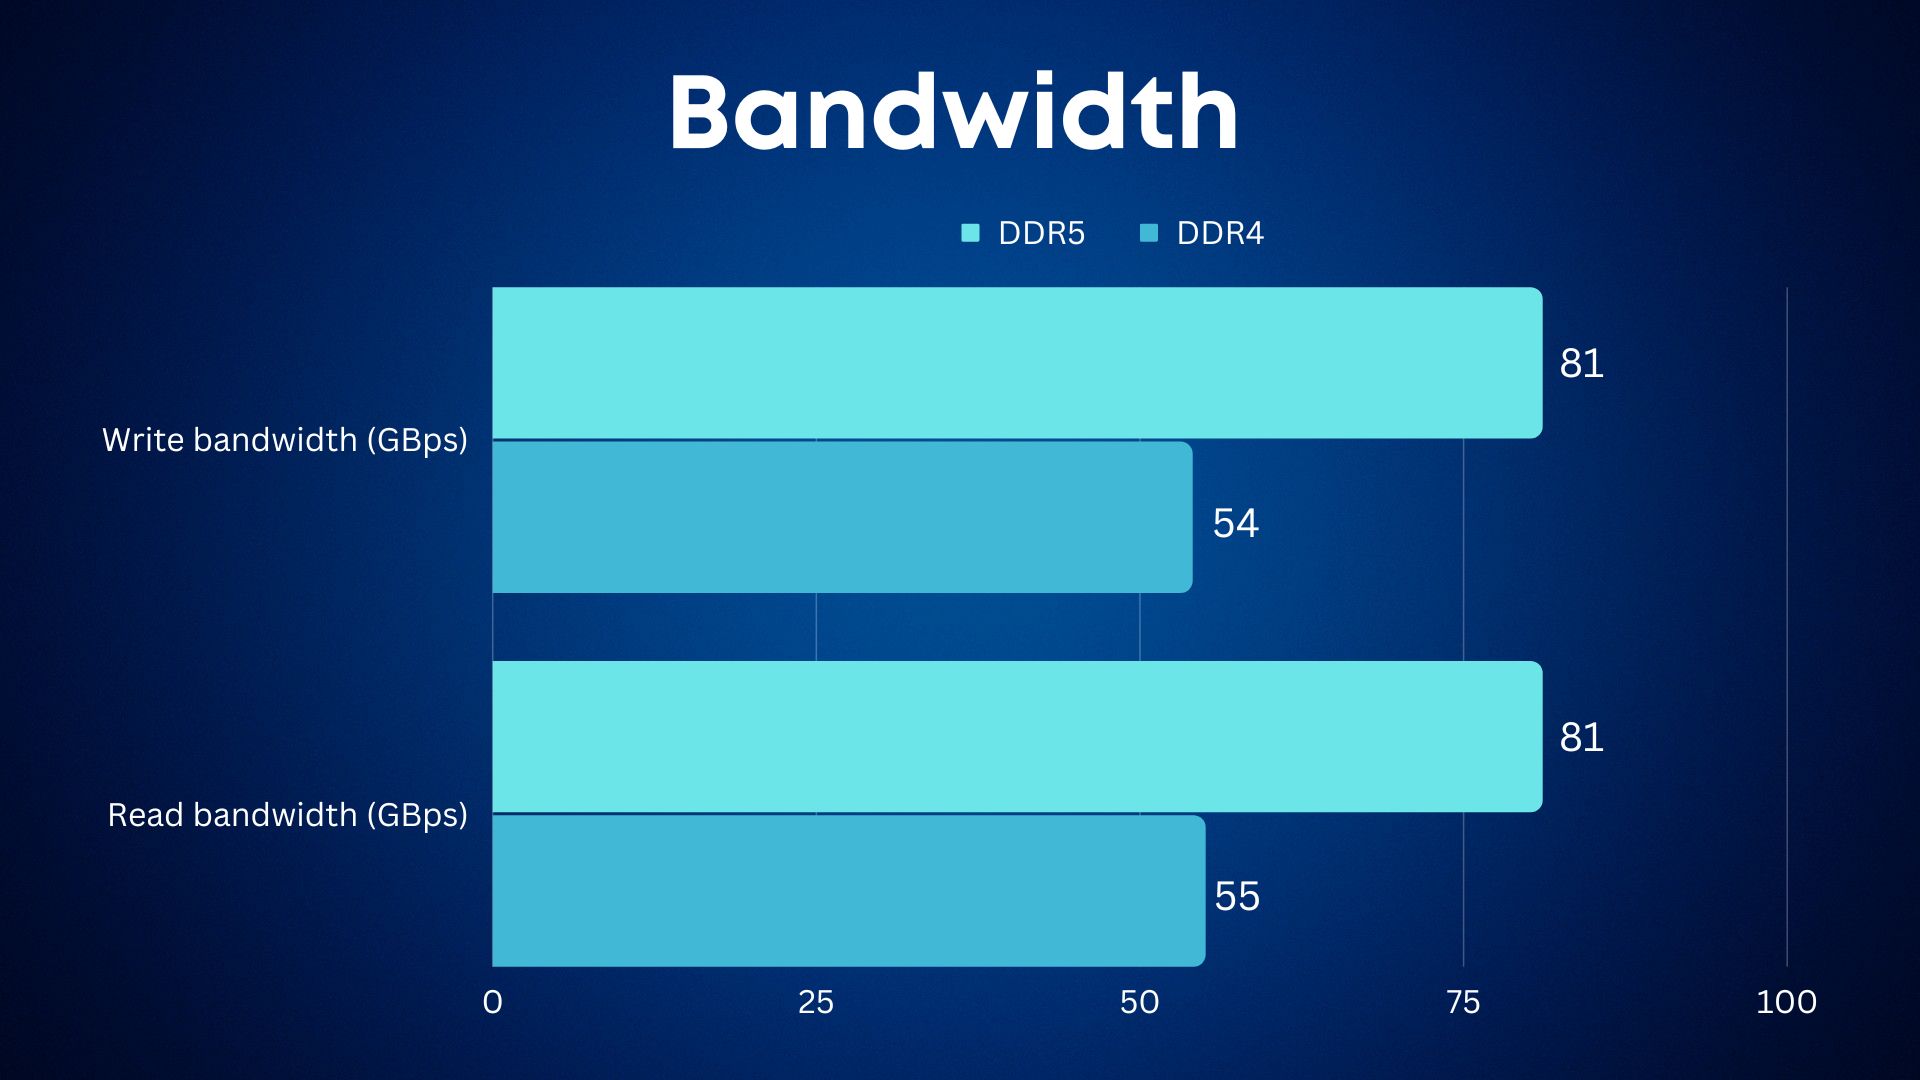 Bandwidth Comparison between DDR4 and DDR5 RAM